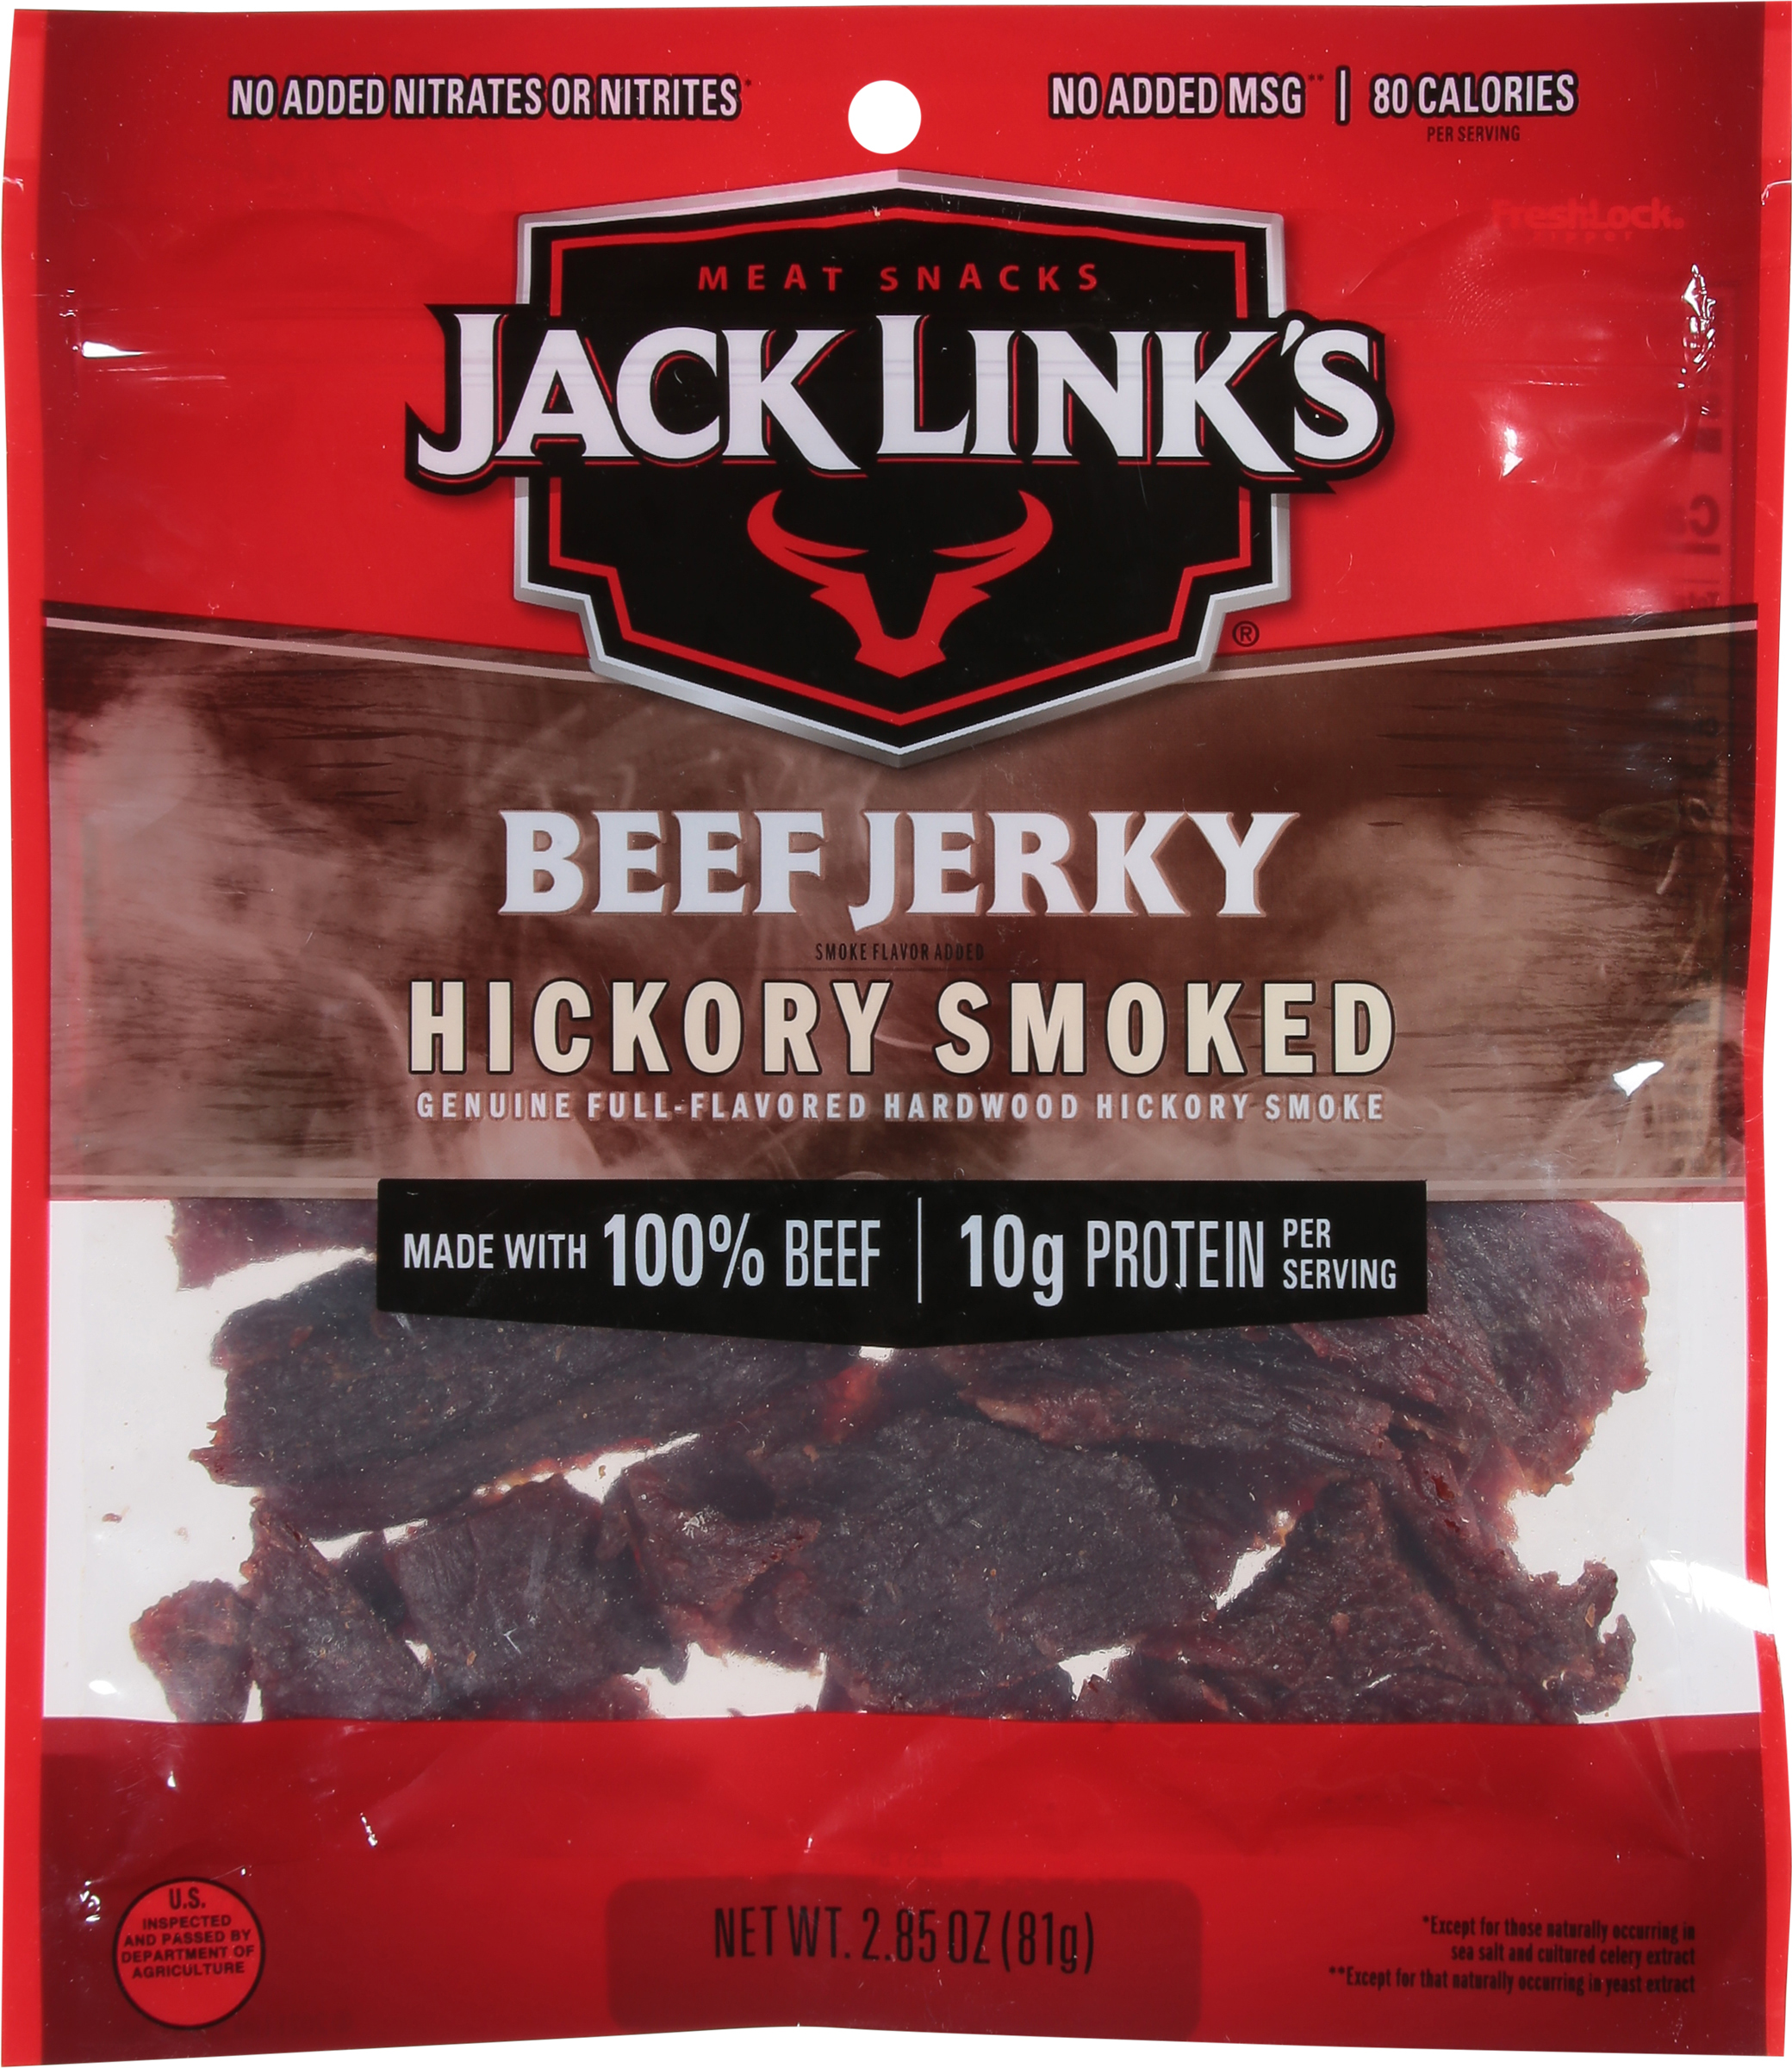 Hickory Smoked Beef Jerky